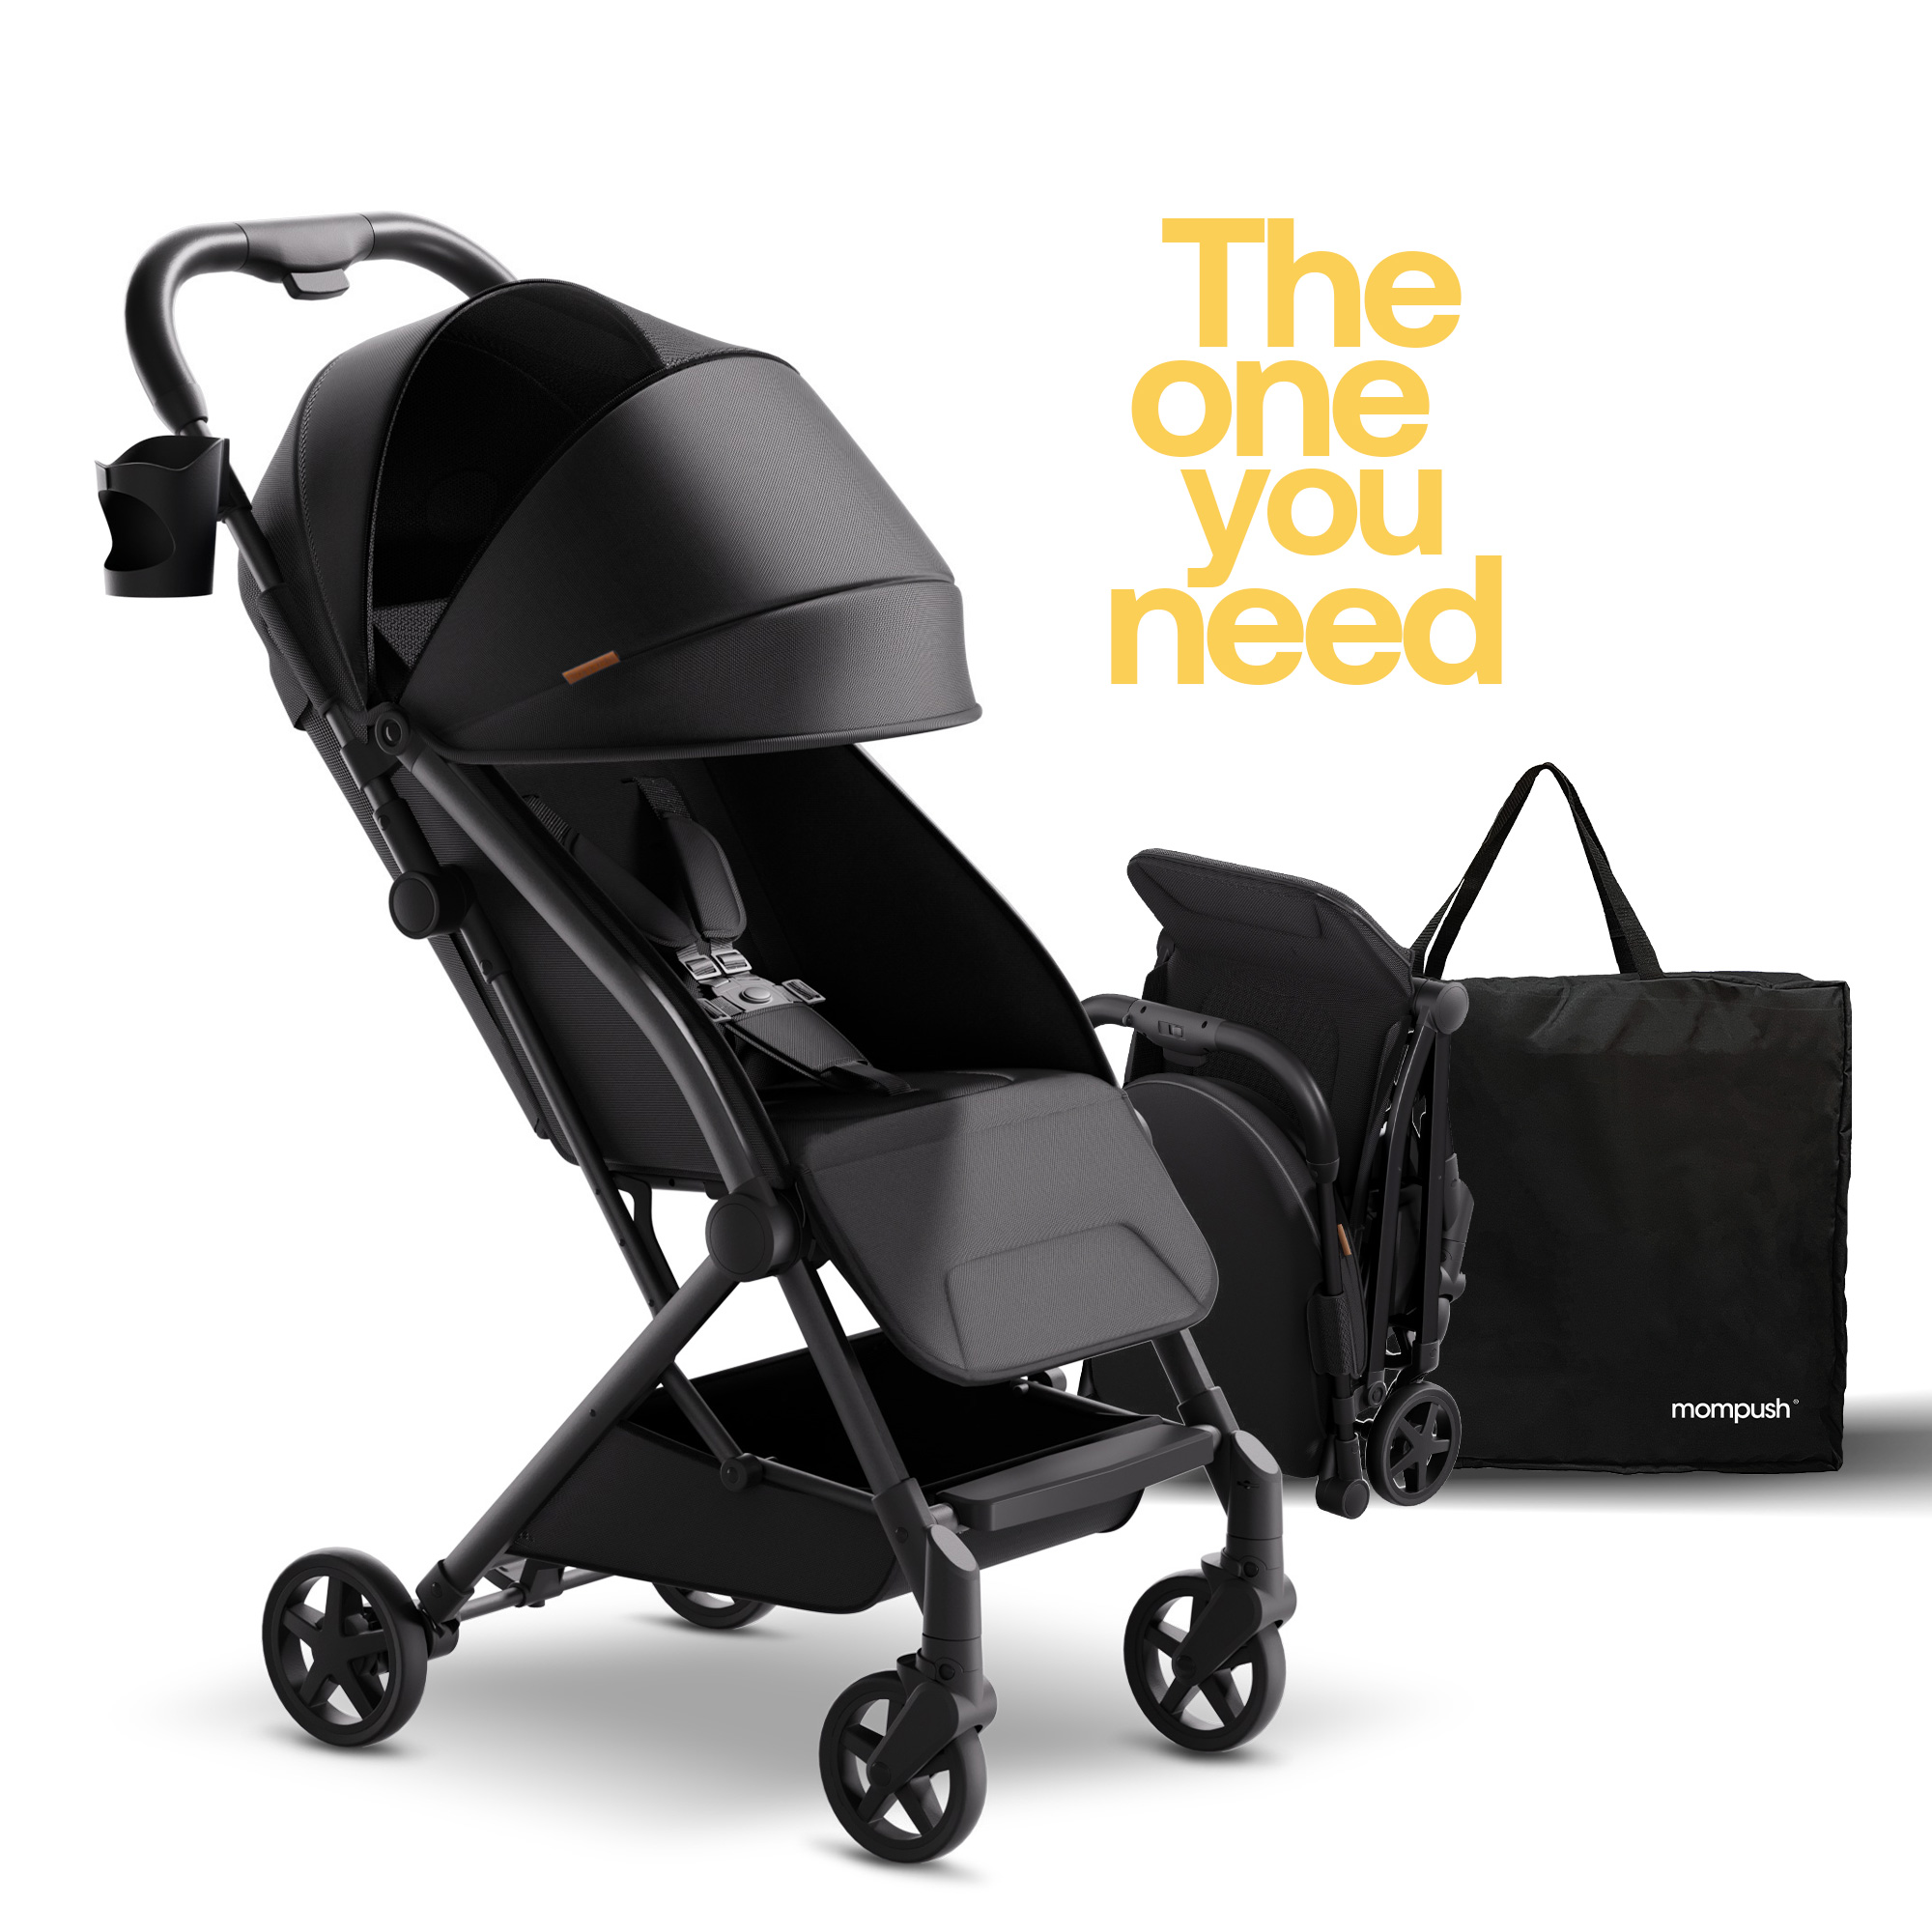 Mompush Lightweight Baby Stroller, Compact Stroller for Airplane Travel, Black, 14.2 lb, Unisex - image 2 of 11